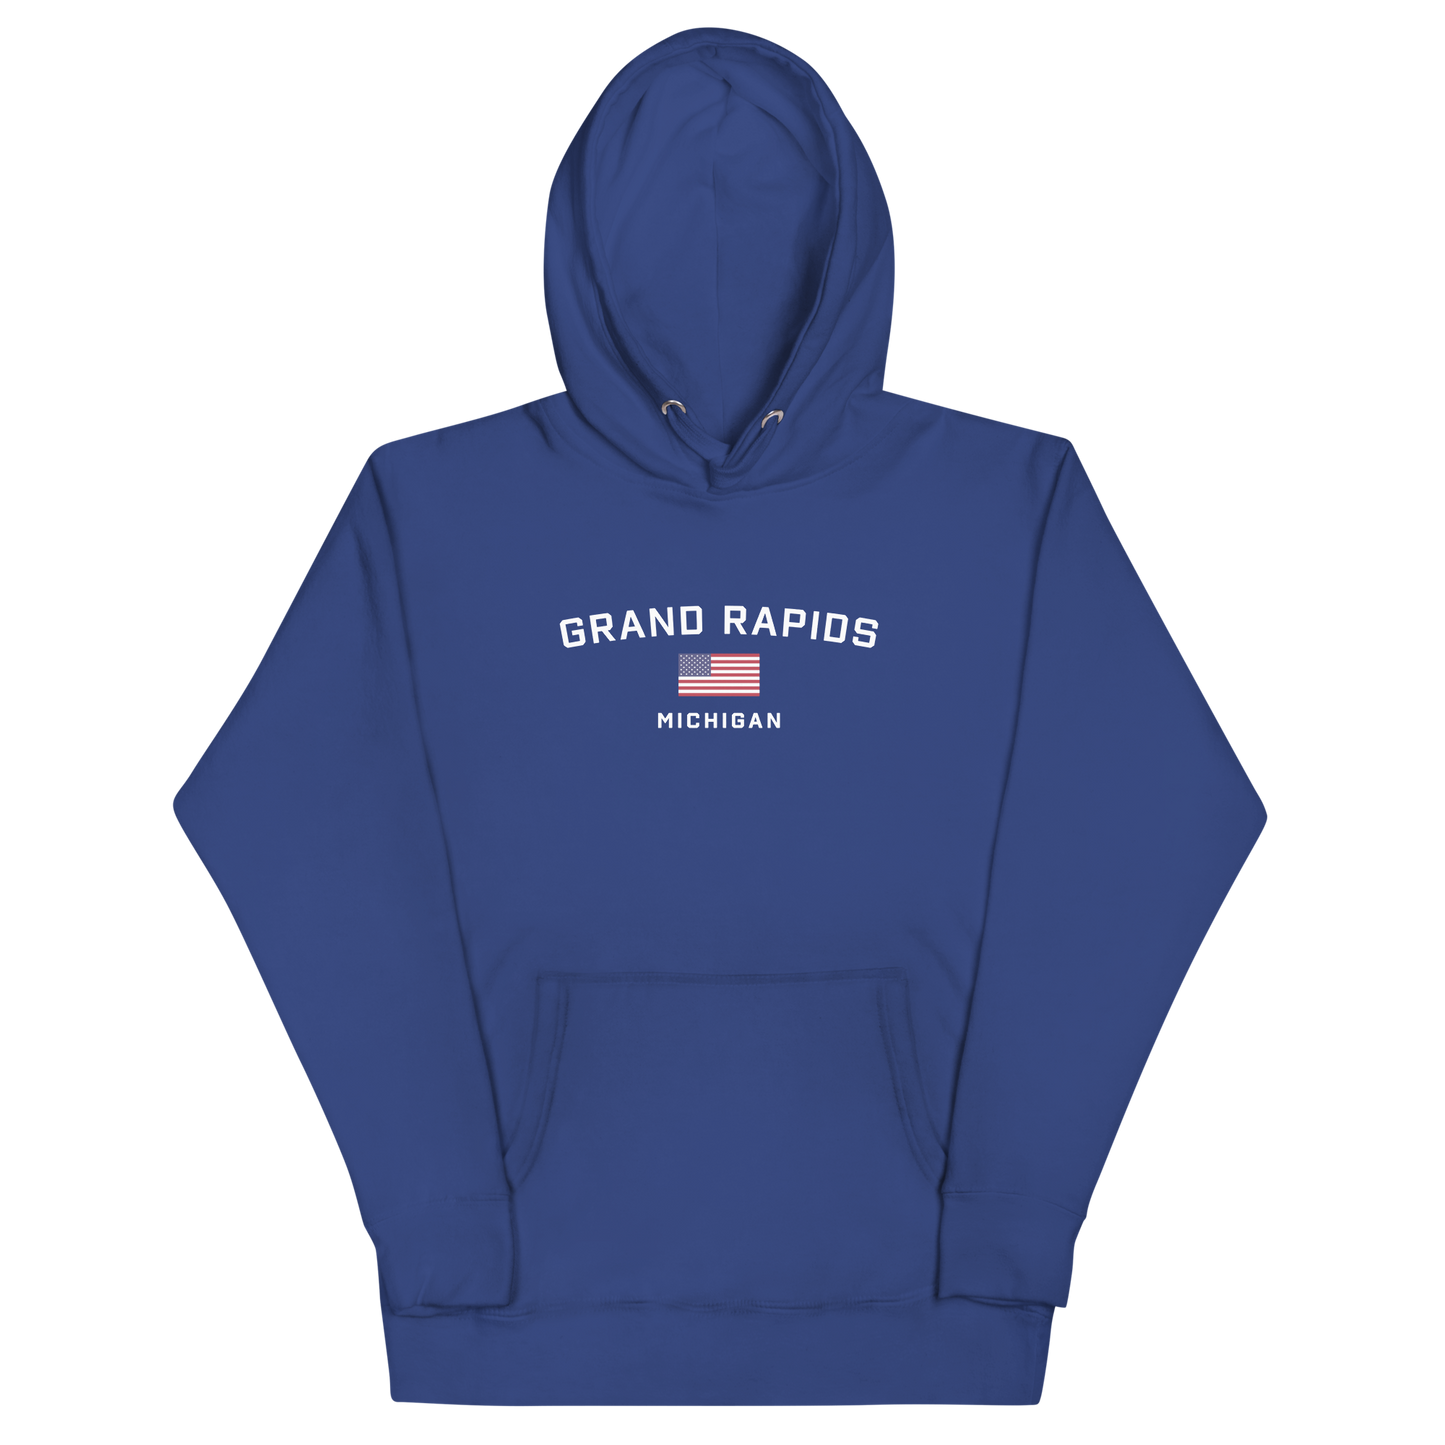 'Grand Rapids Michigan' Unisex Premium Hoodie (w/ USA Flag)